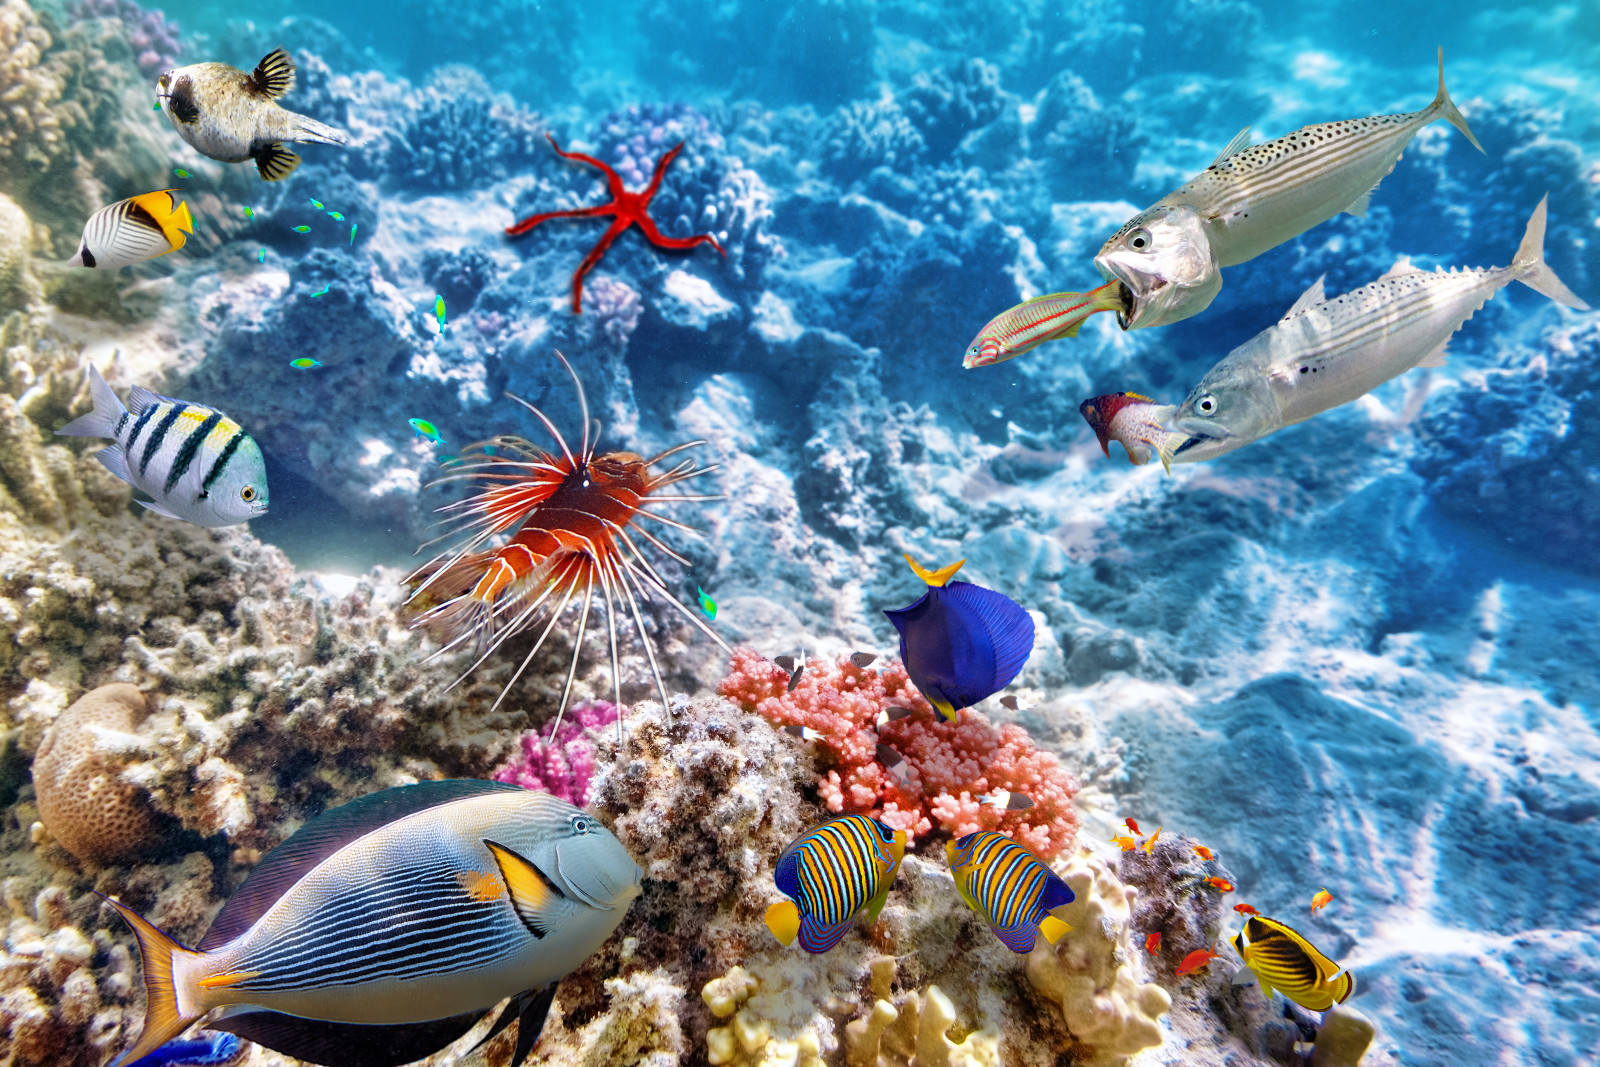 Laut, lautan, ikan, dunia bawah air, tropis, karang, Ikan, Dunia